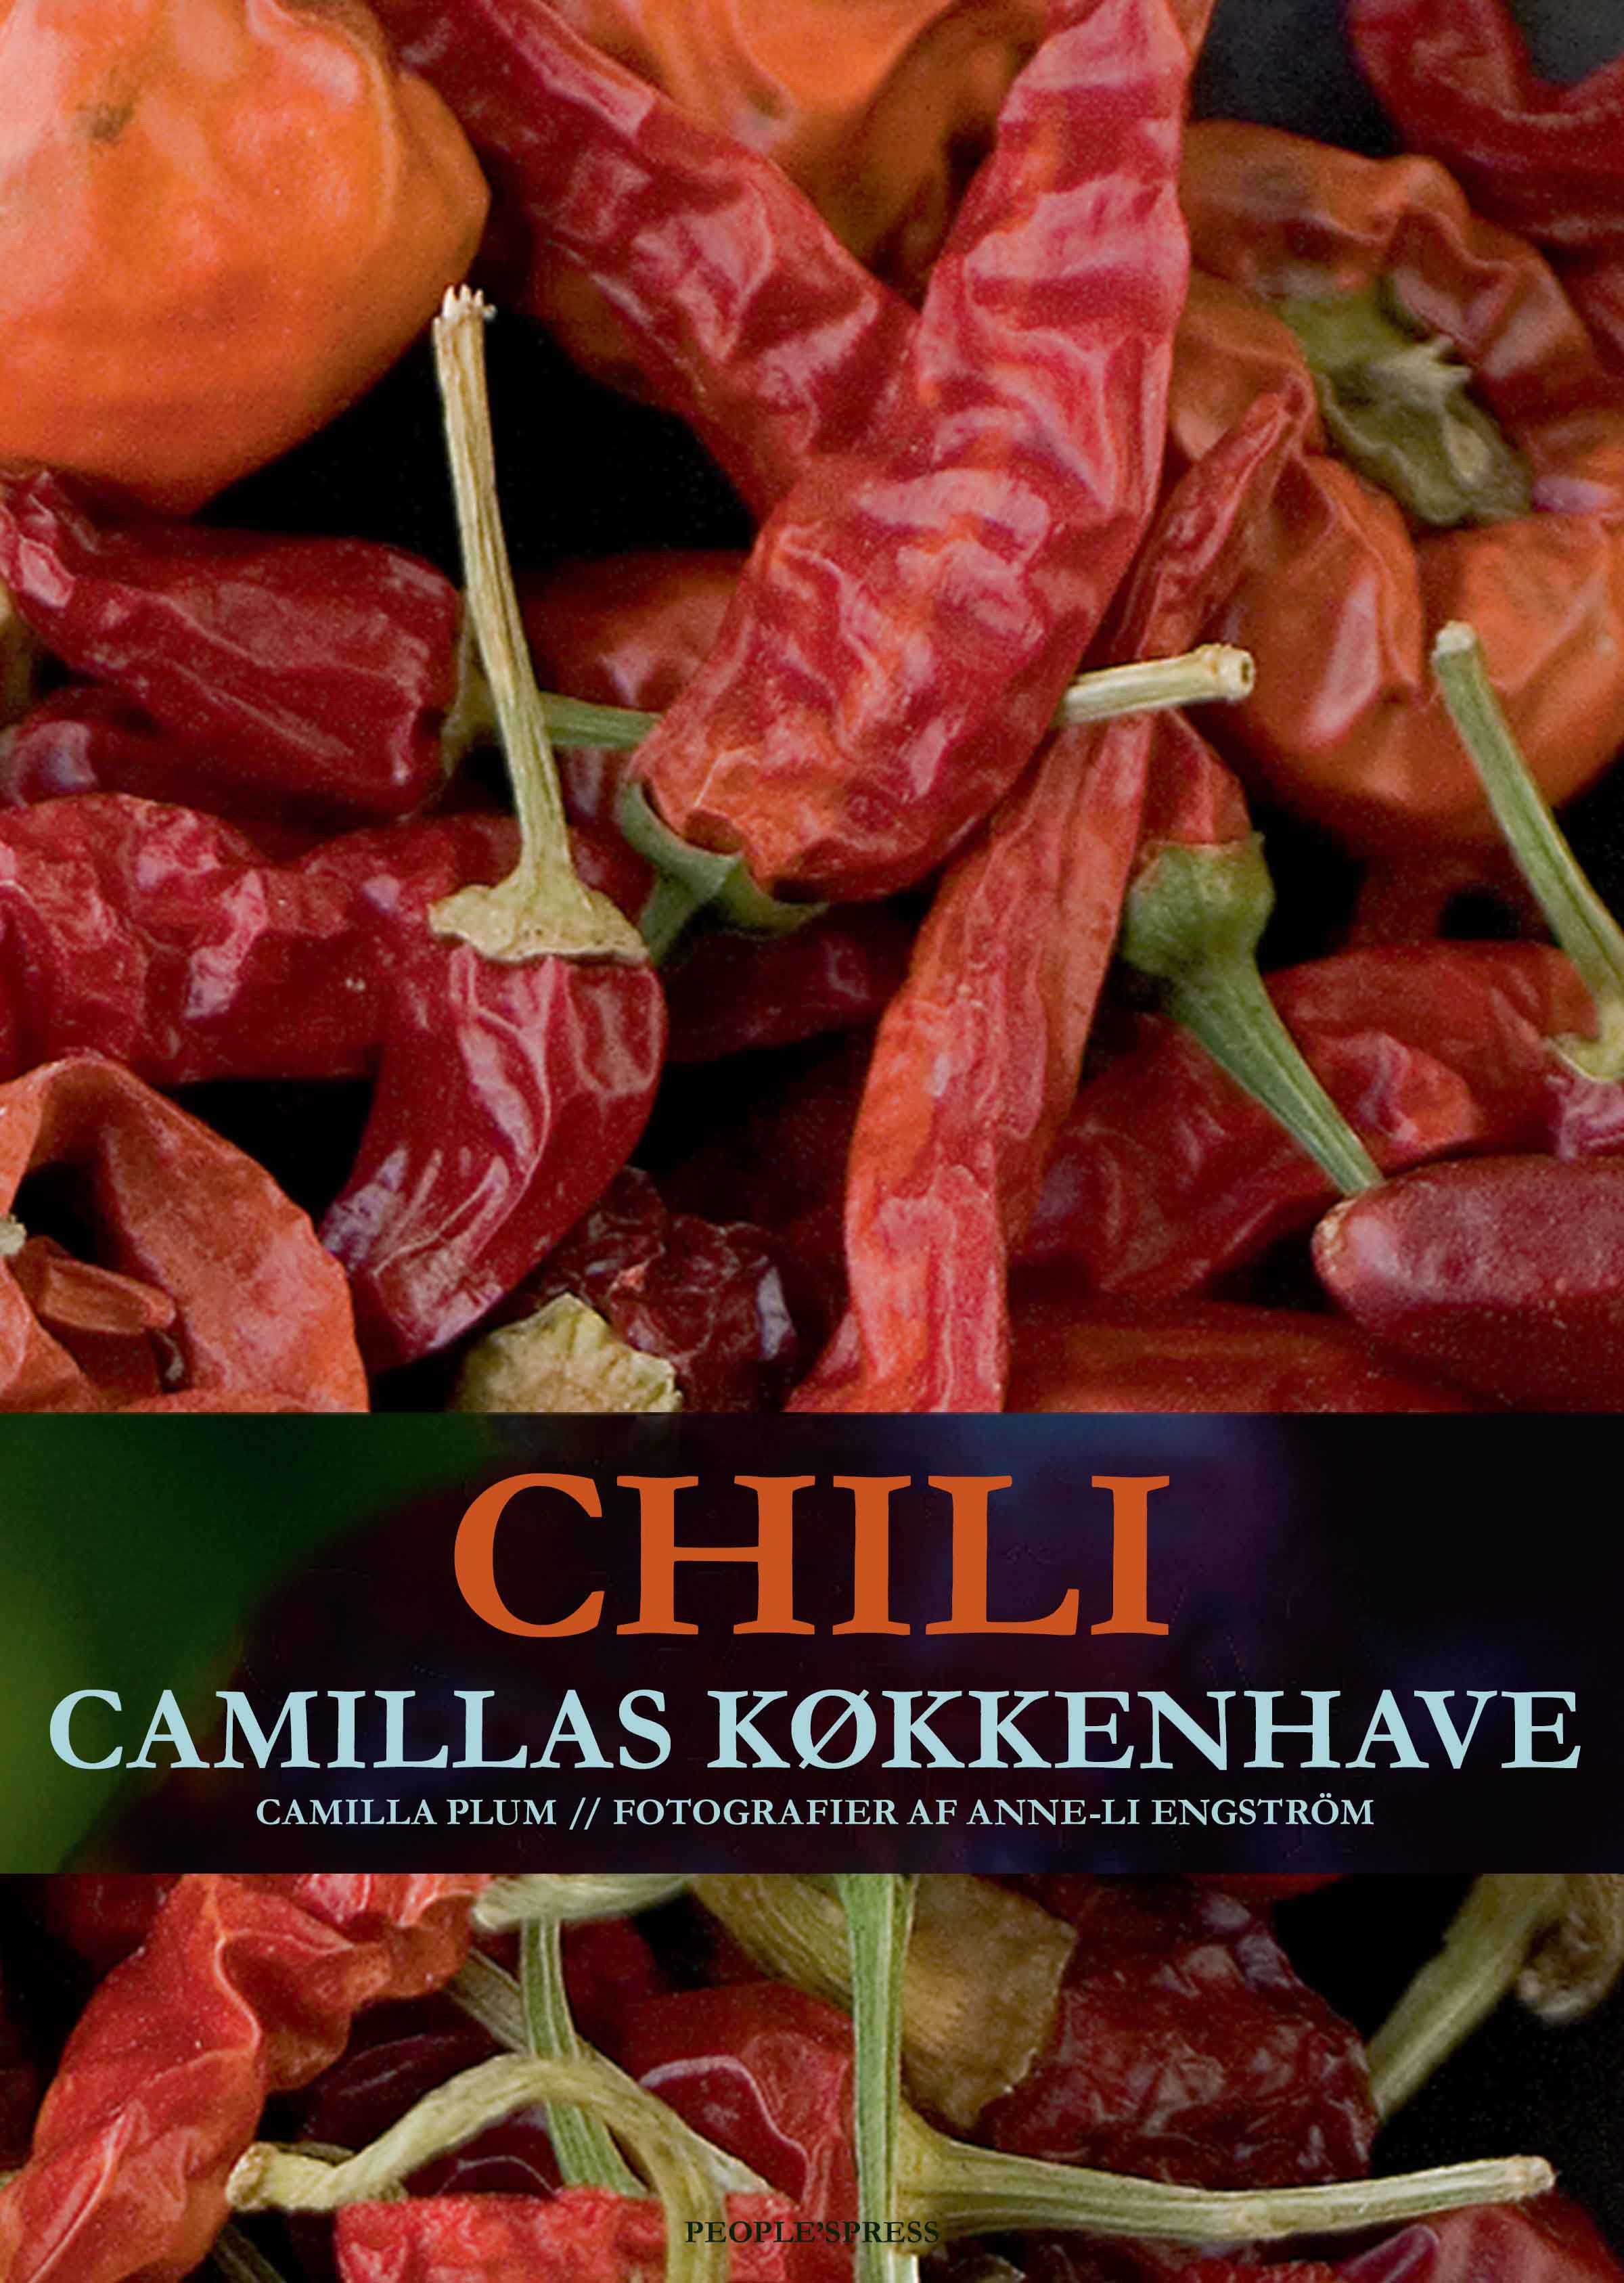 Chili - Camillas køkkenhave, eBook by Camilla Plum